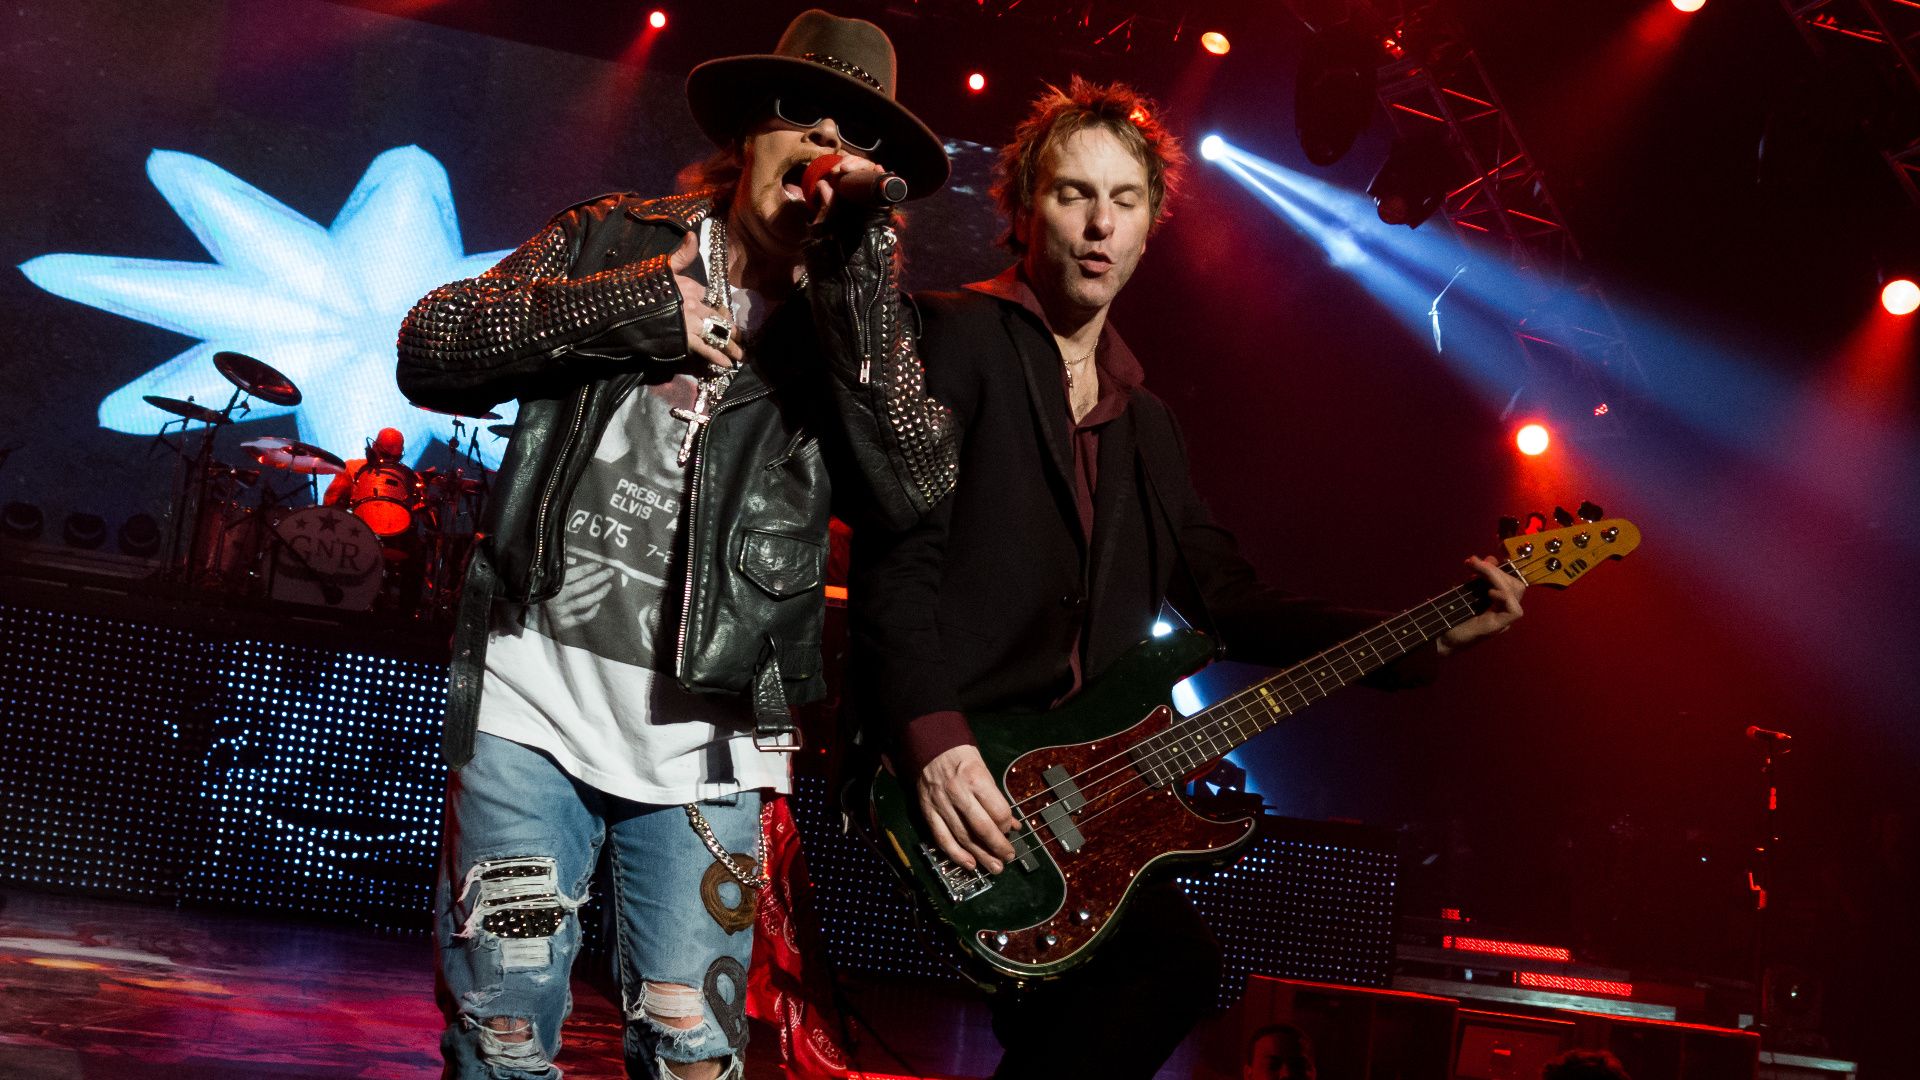 Guns N' Roses Appetite for Democracy 3D Live at Hard Rock Las Vegas background